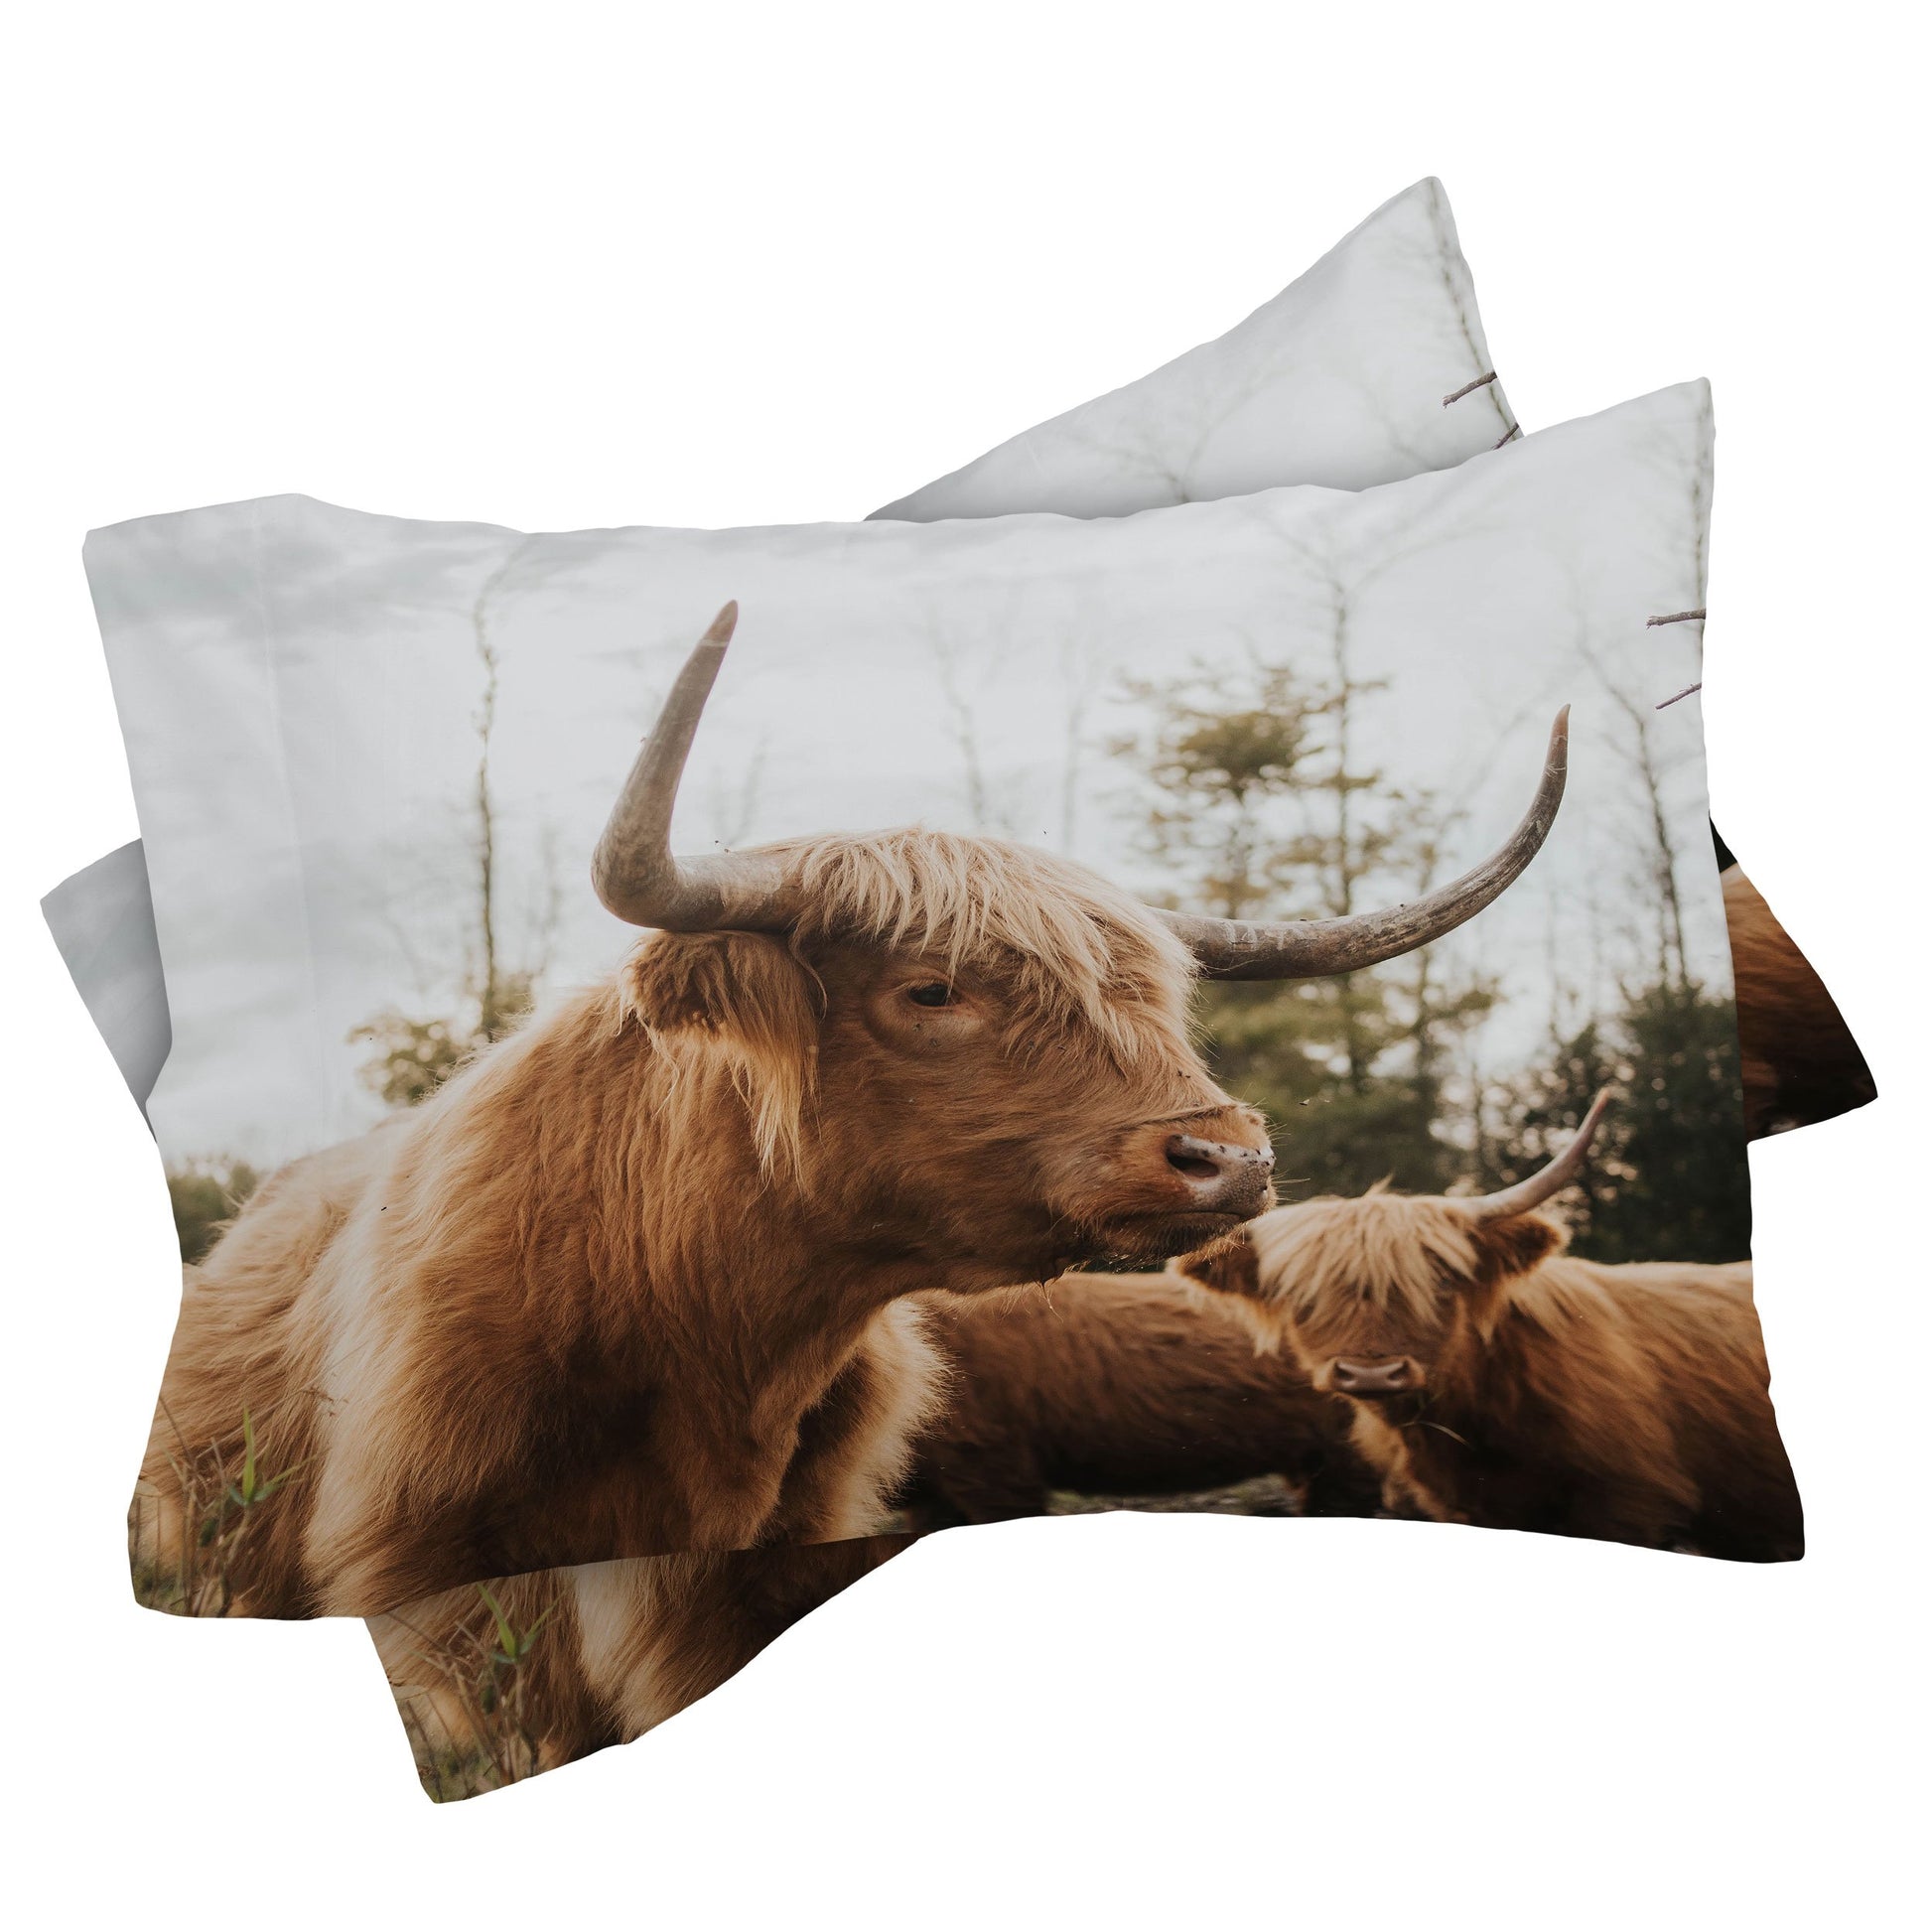 Statuesque Highland Cow Pillow Shams - bedding, blanket, case, cases, cow, cows, decor, highland, home, pillow, ranch, western -  - Baha Ranch Western Wear